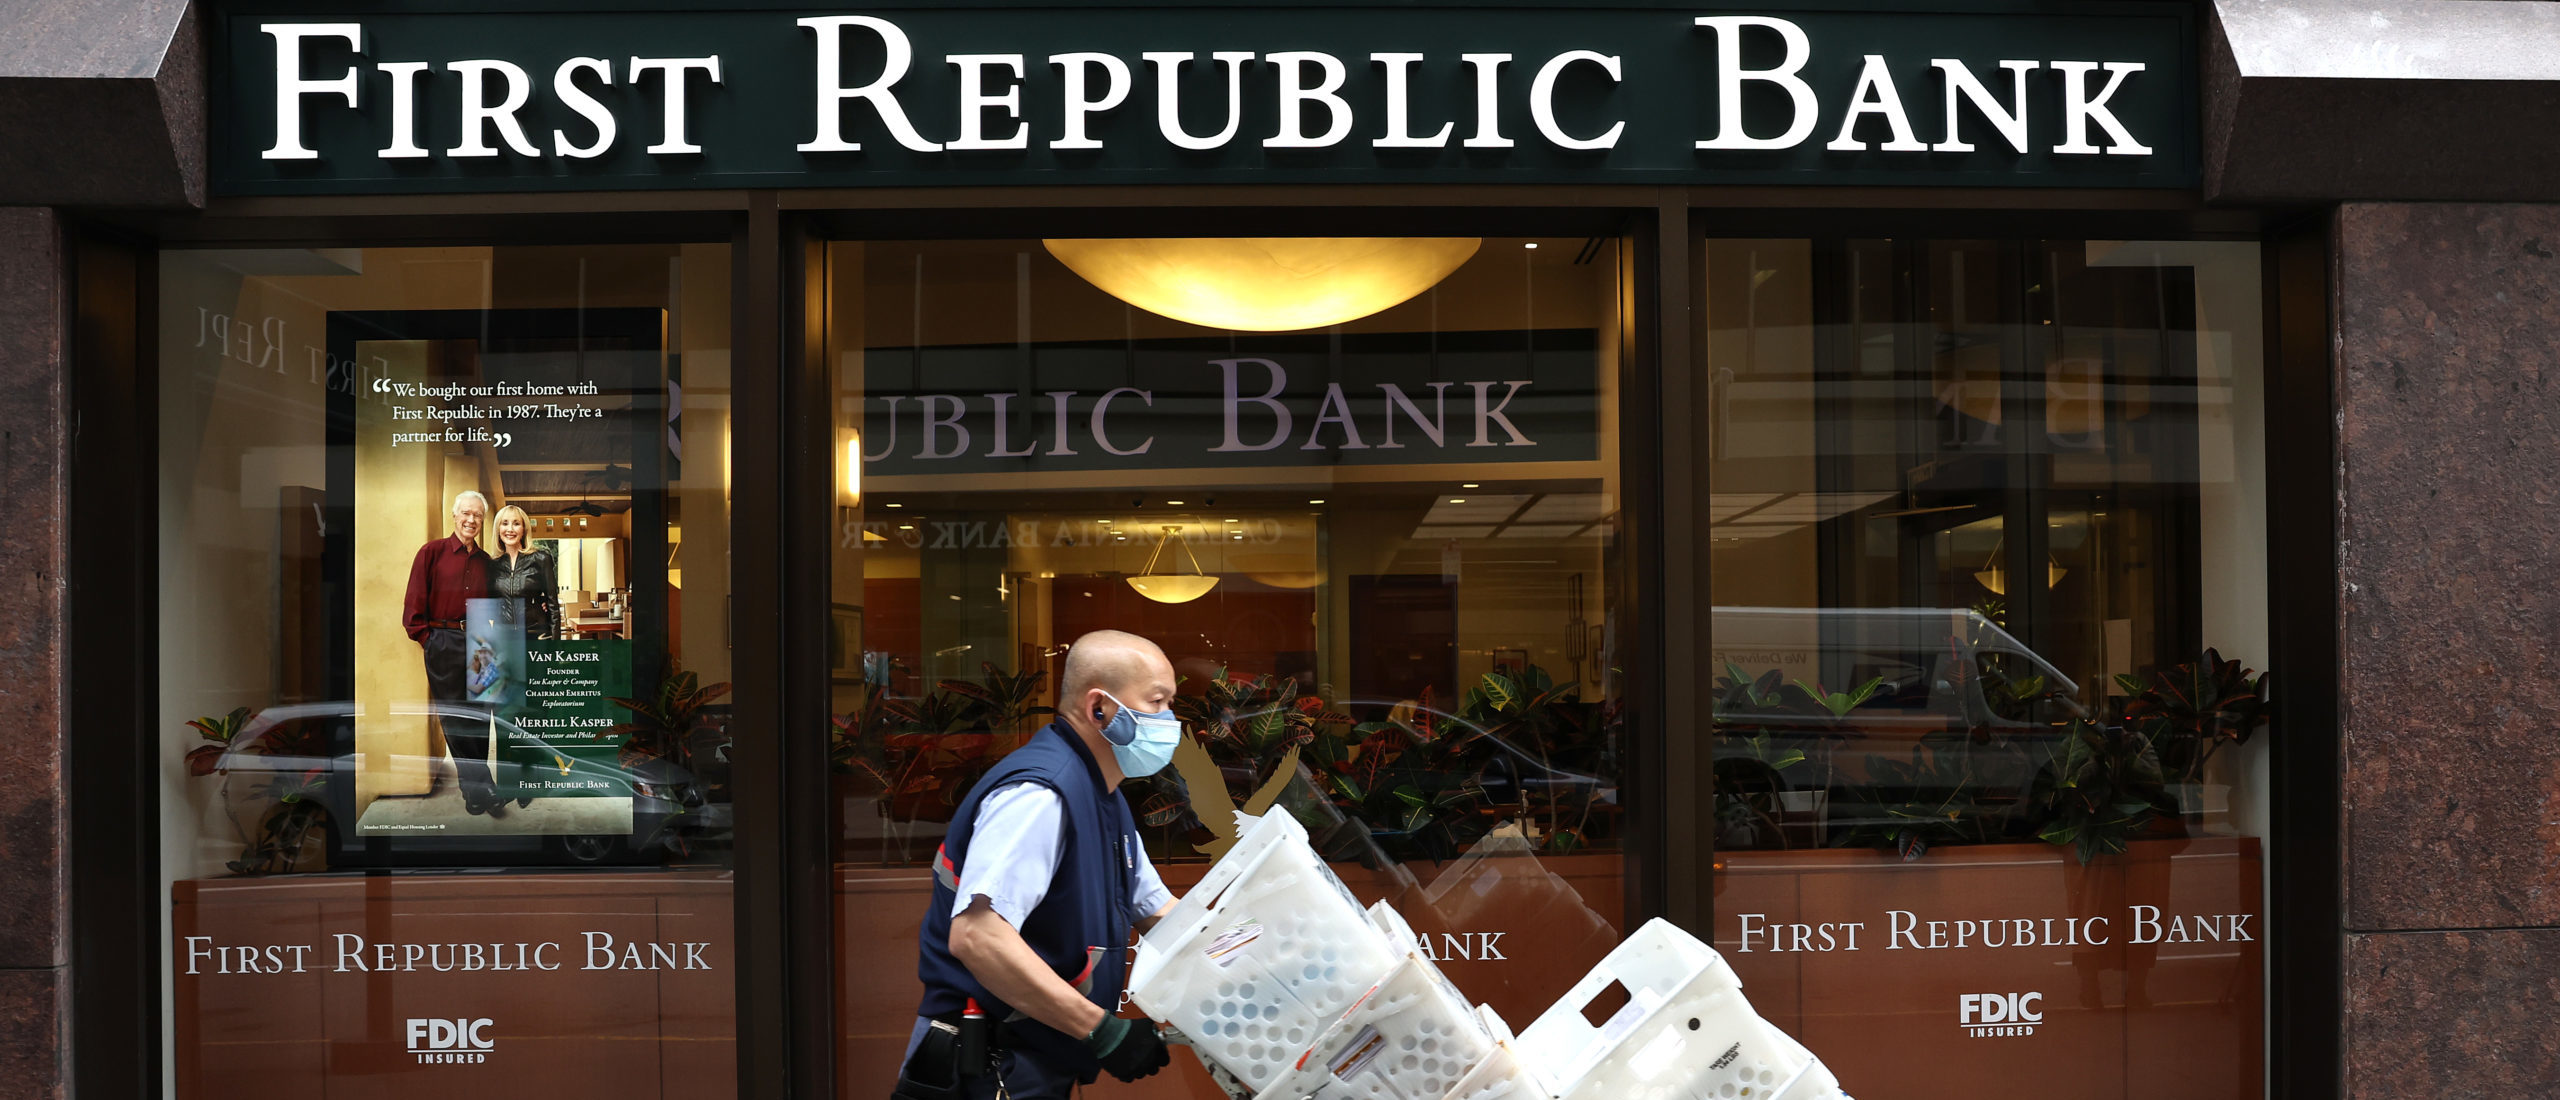 Regional Bank Stocks Plummet Following First Republic Collapse The Daily Caller 5089